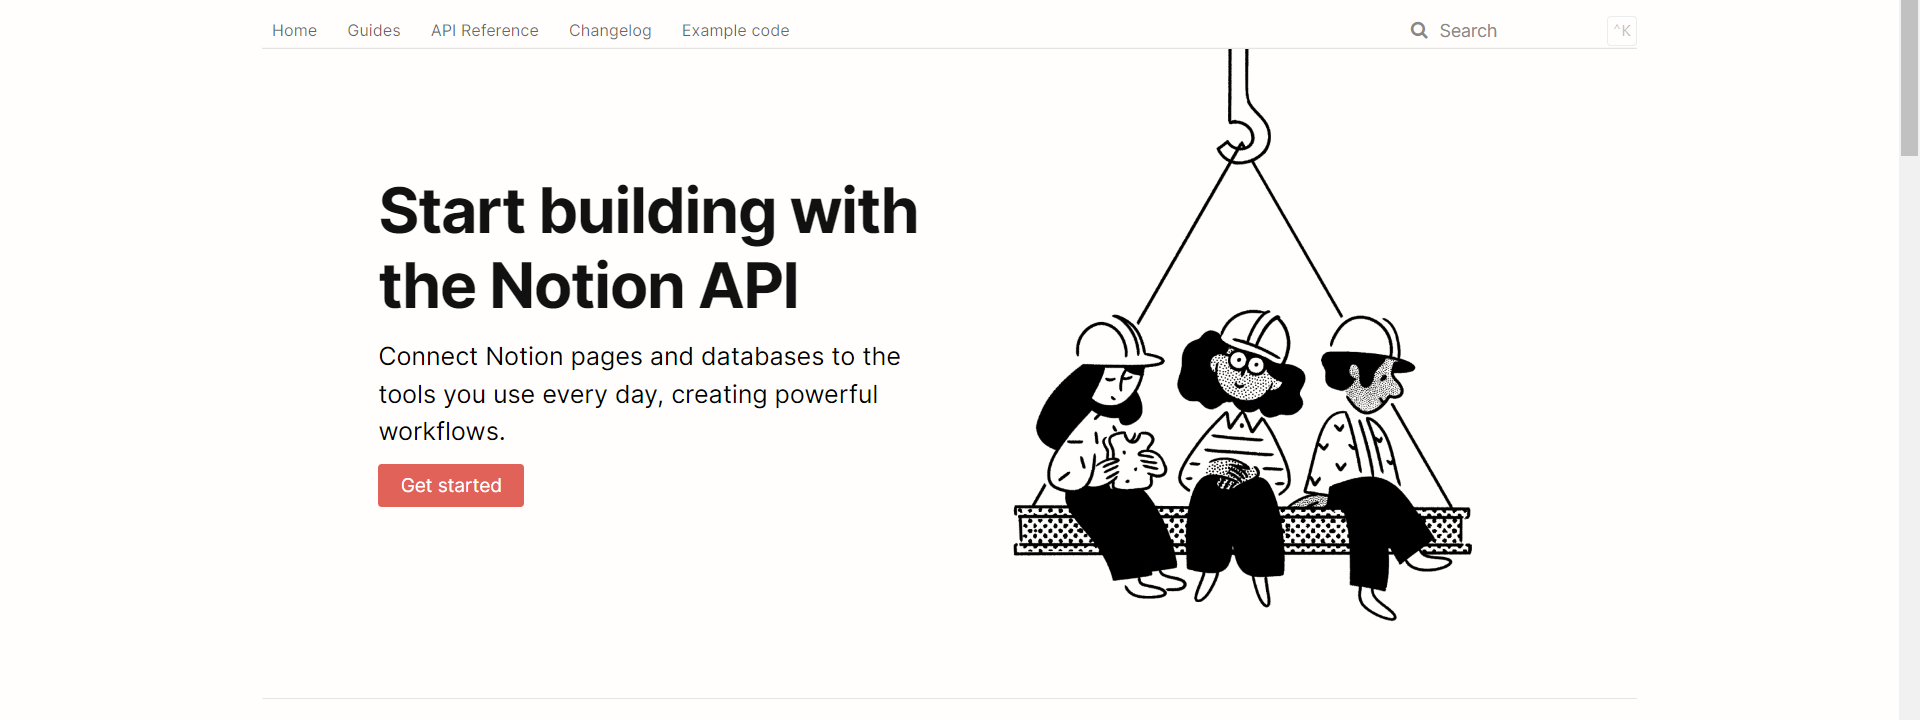 Notion 官方對其 API 的介紹：打通 Notion 頁面、數據庫與你日常使用的工具，創建強大的工作流